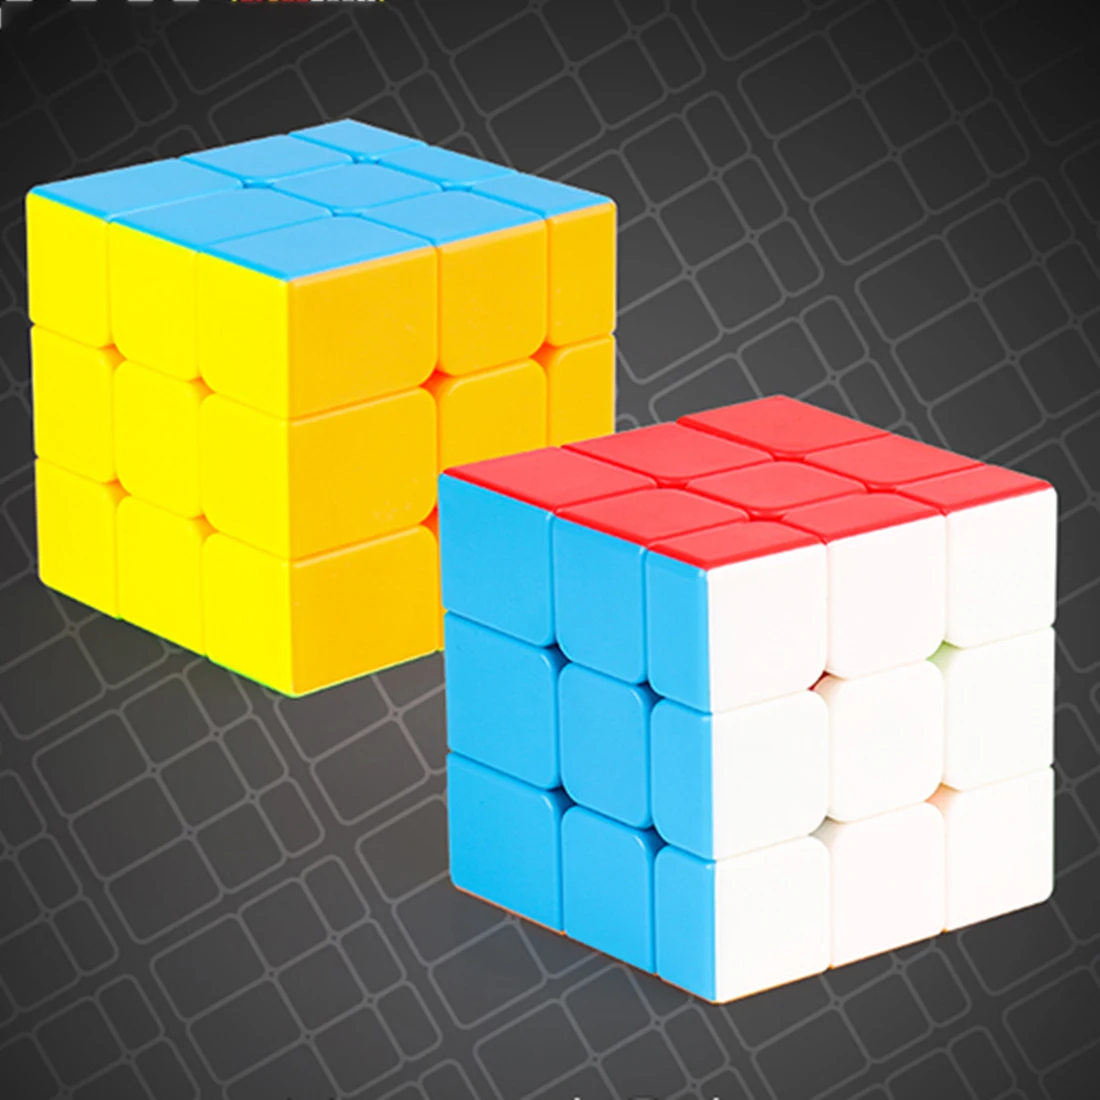 Surwish MF8847 Mofang Jiaoshi Inequilateral Magic куб обучающий Игрушки Для Тренировки Мозга-красочные